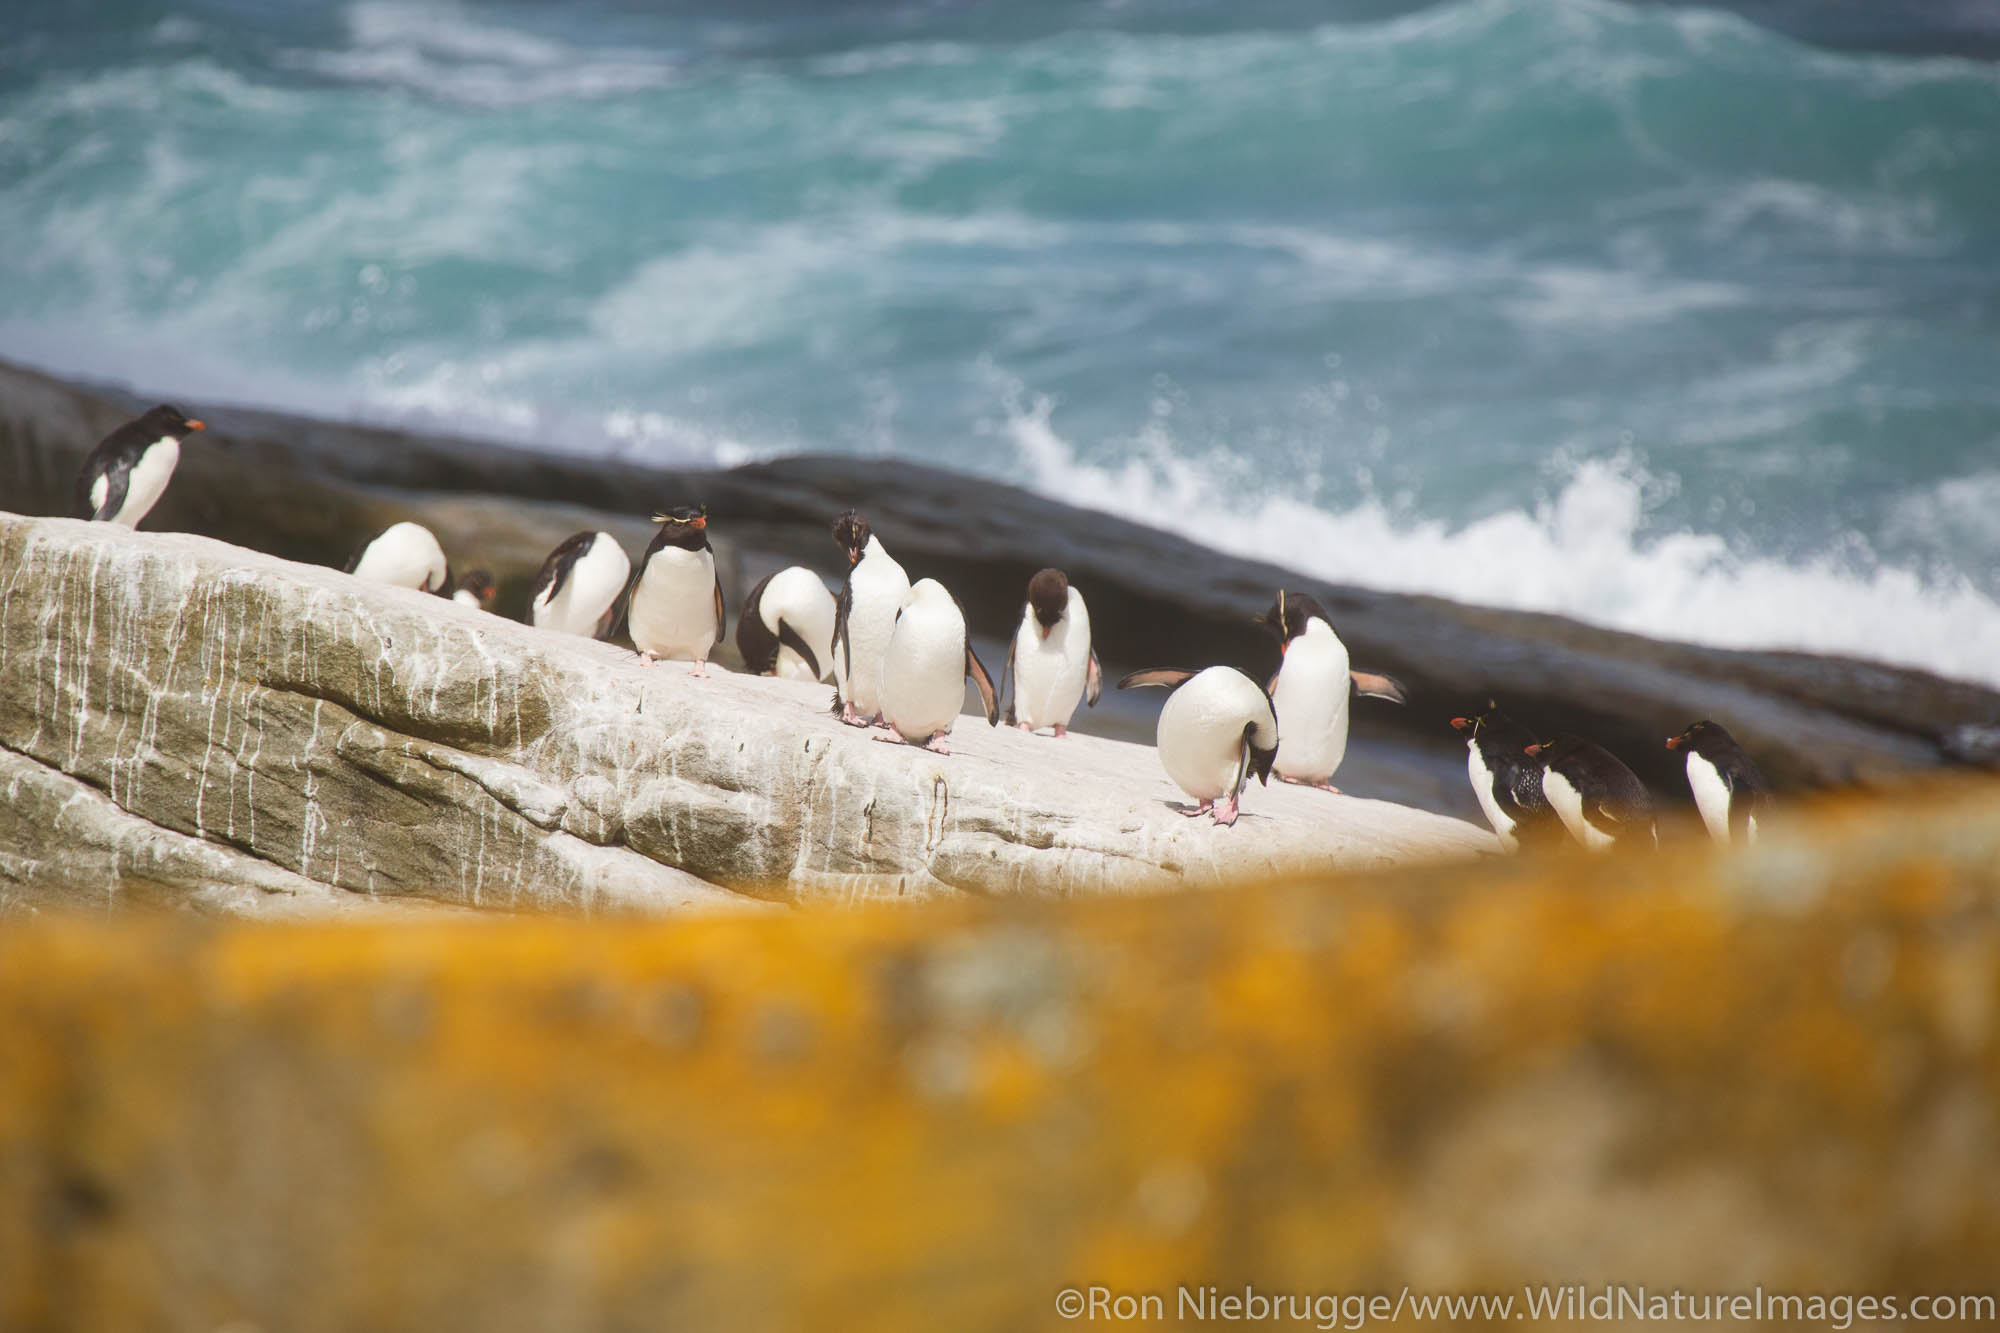 Rockhopper penguins, New Island Conservation Trust, New Island, Falkland Islands.